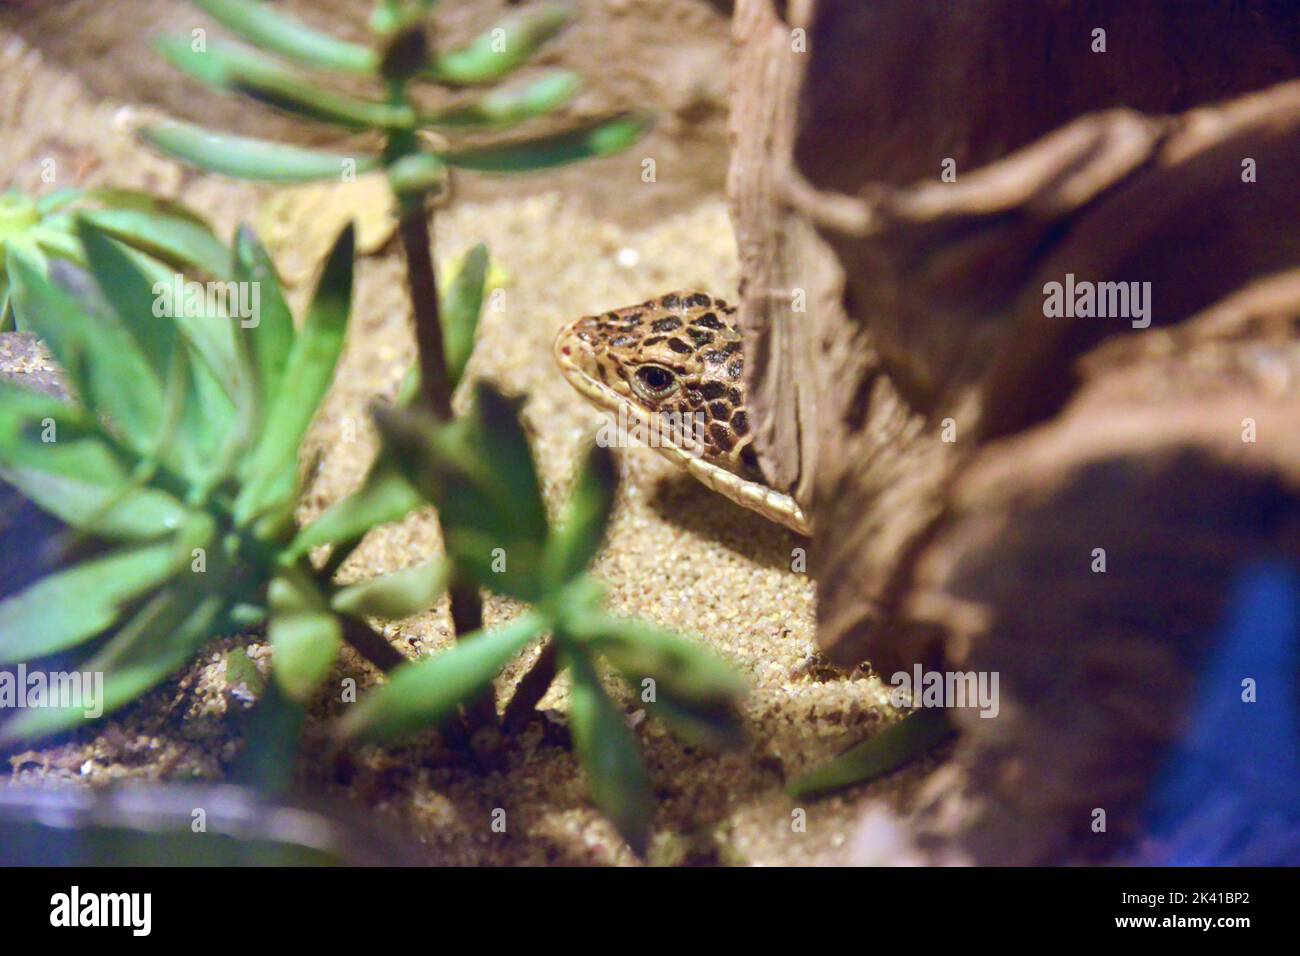 Reptile hidding under some rocks Stock Photo